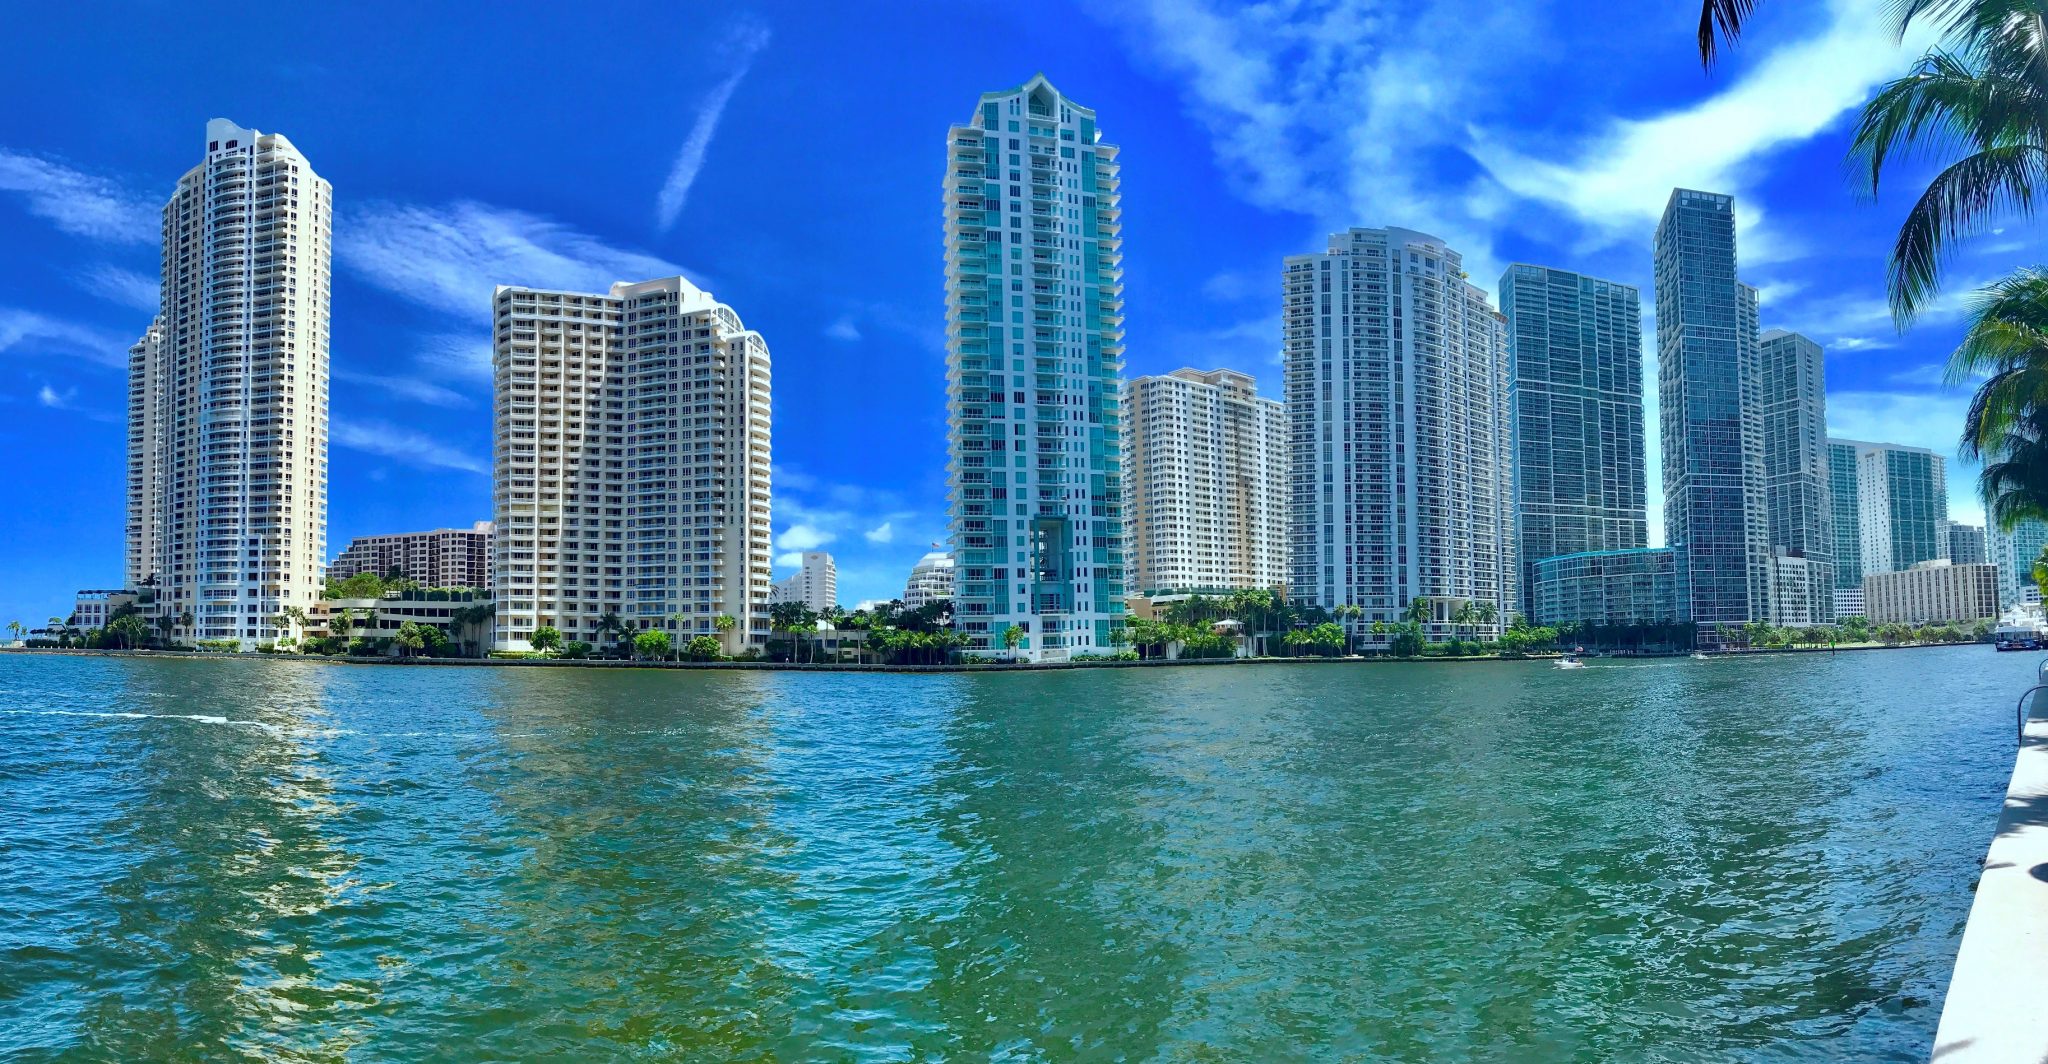 Miami Condo Market update review July 2017